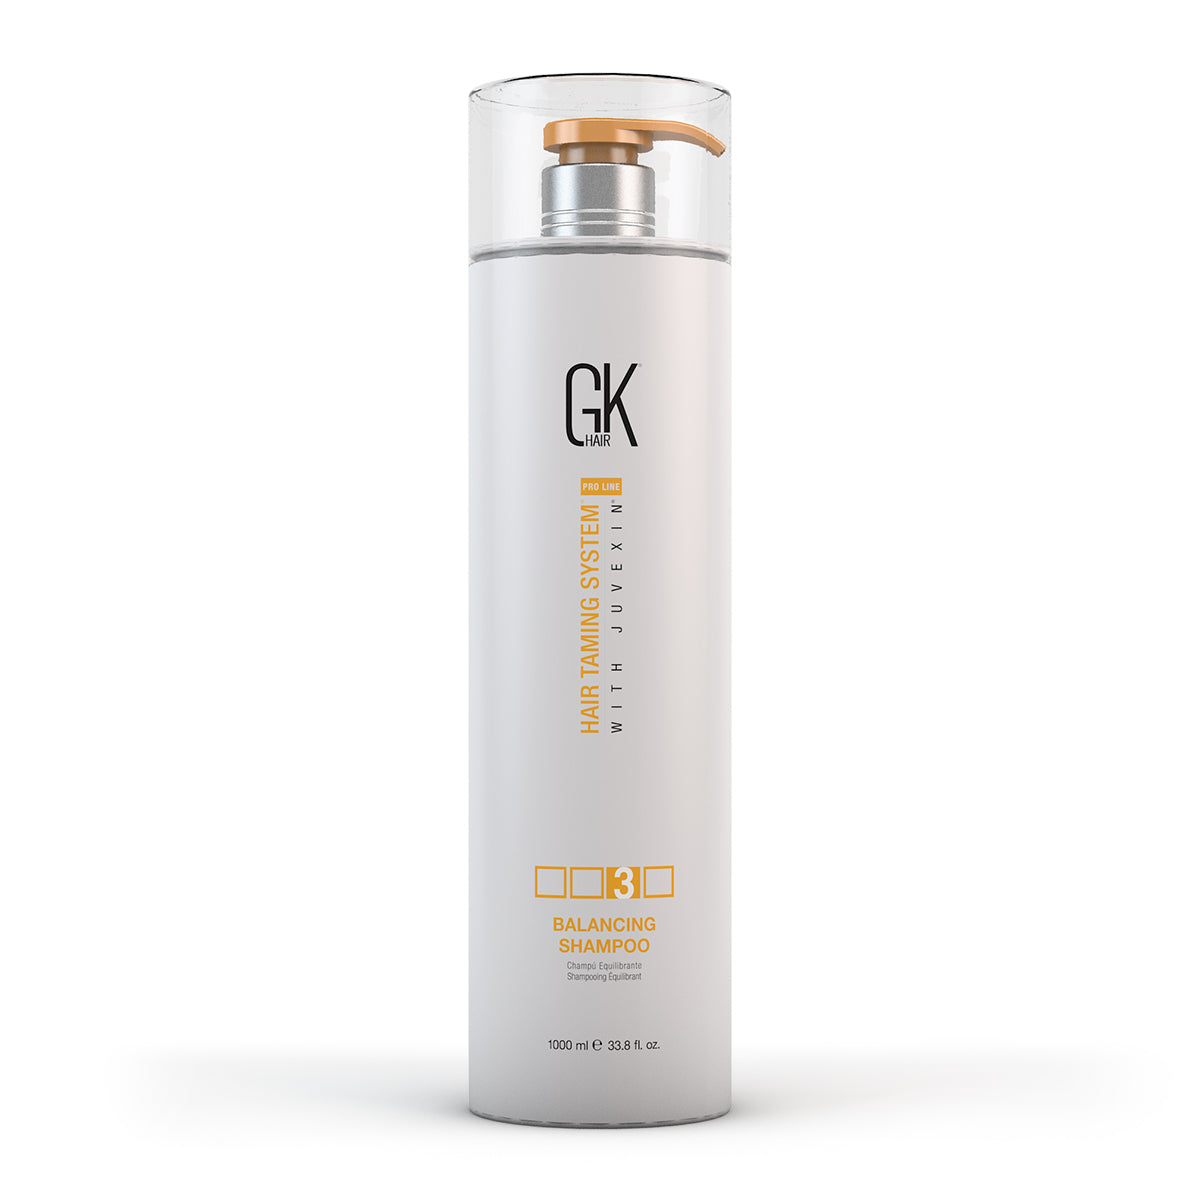 GK Hair Balancing Color Protection Moisturizing Shampoo 1000ml